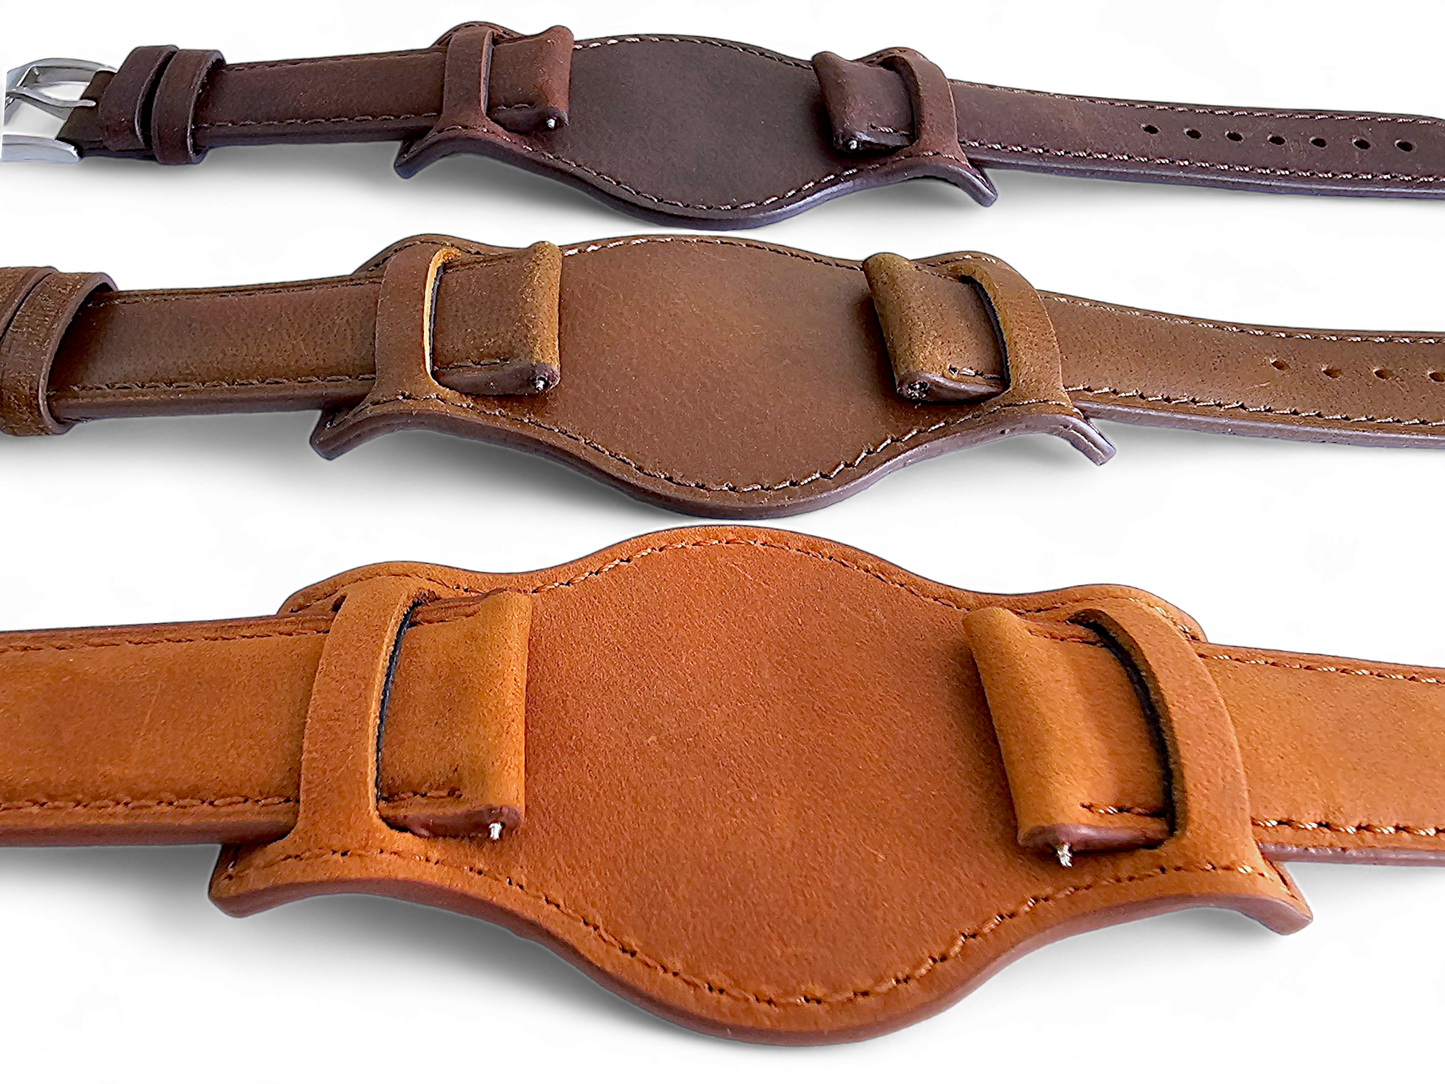 Leather Bund Watch Strap Handmade Military 20mm 22mm Mid Brown